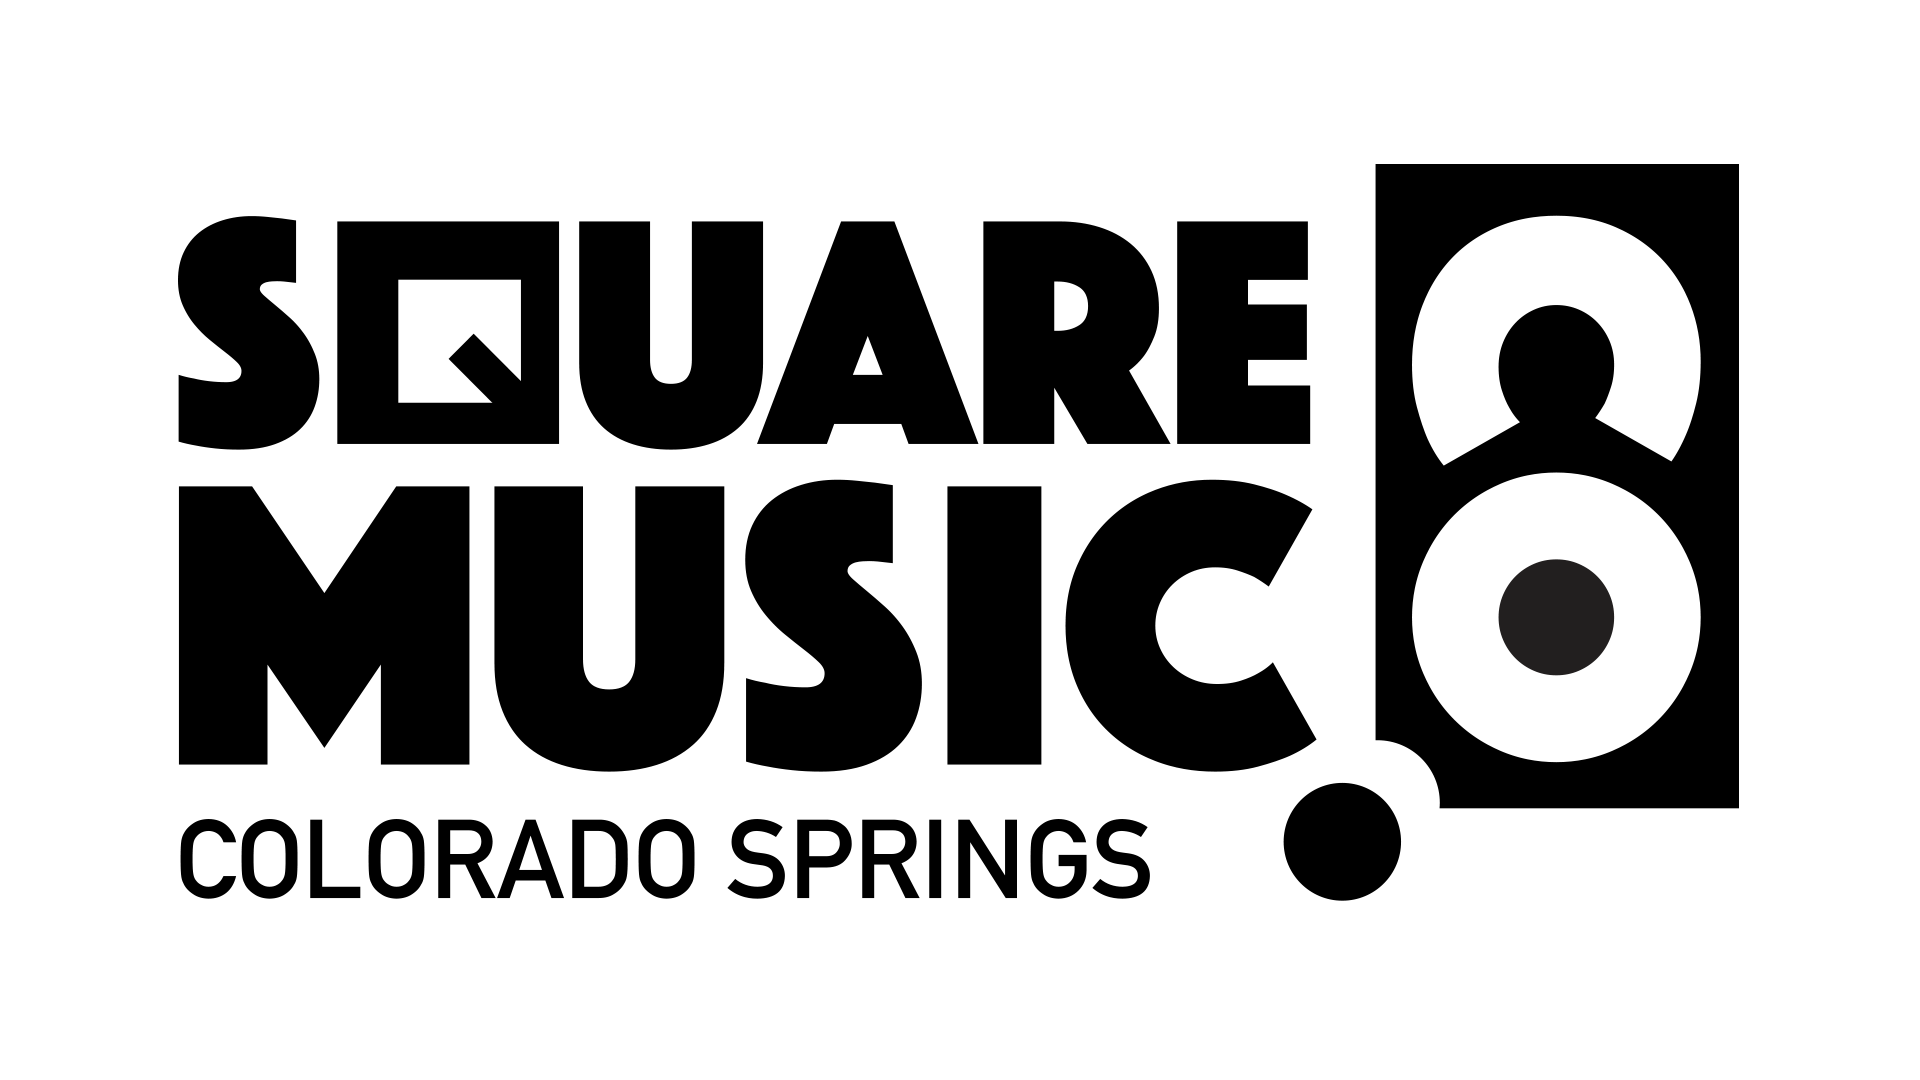 Colorado Springs CO Square Music Company